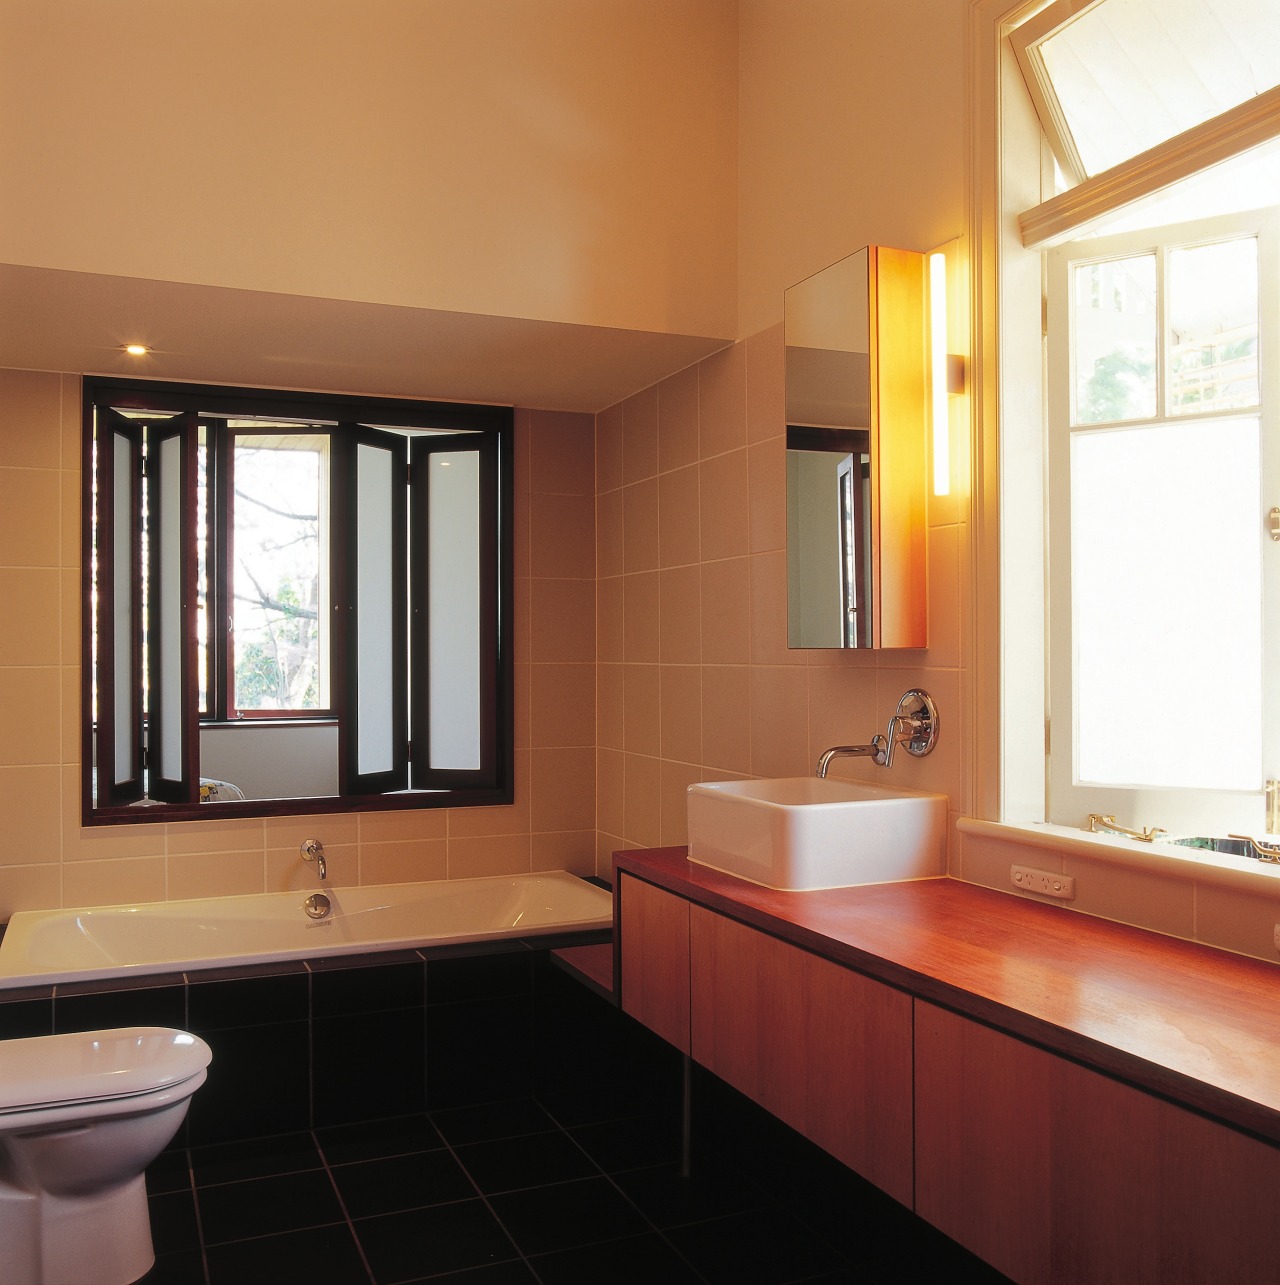 View of the bathroom architecture, bathroom, daylighting, floor, flooring, home, interior design, property, real estate, room, sink, window, orange